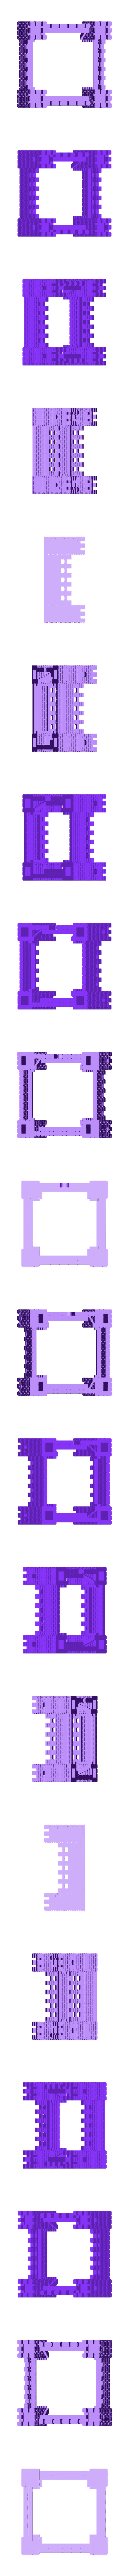 castle.stl Download STL file Castle • 3D printing template, eAgent